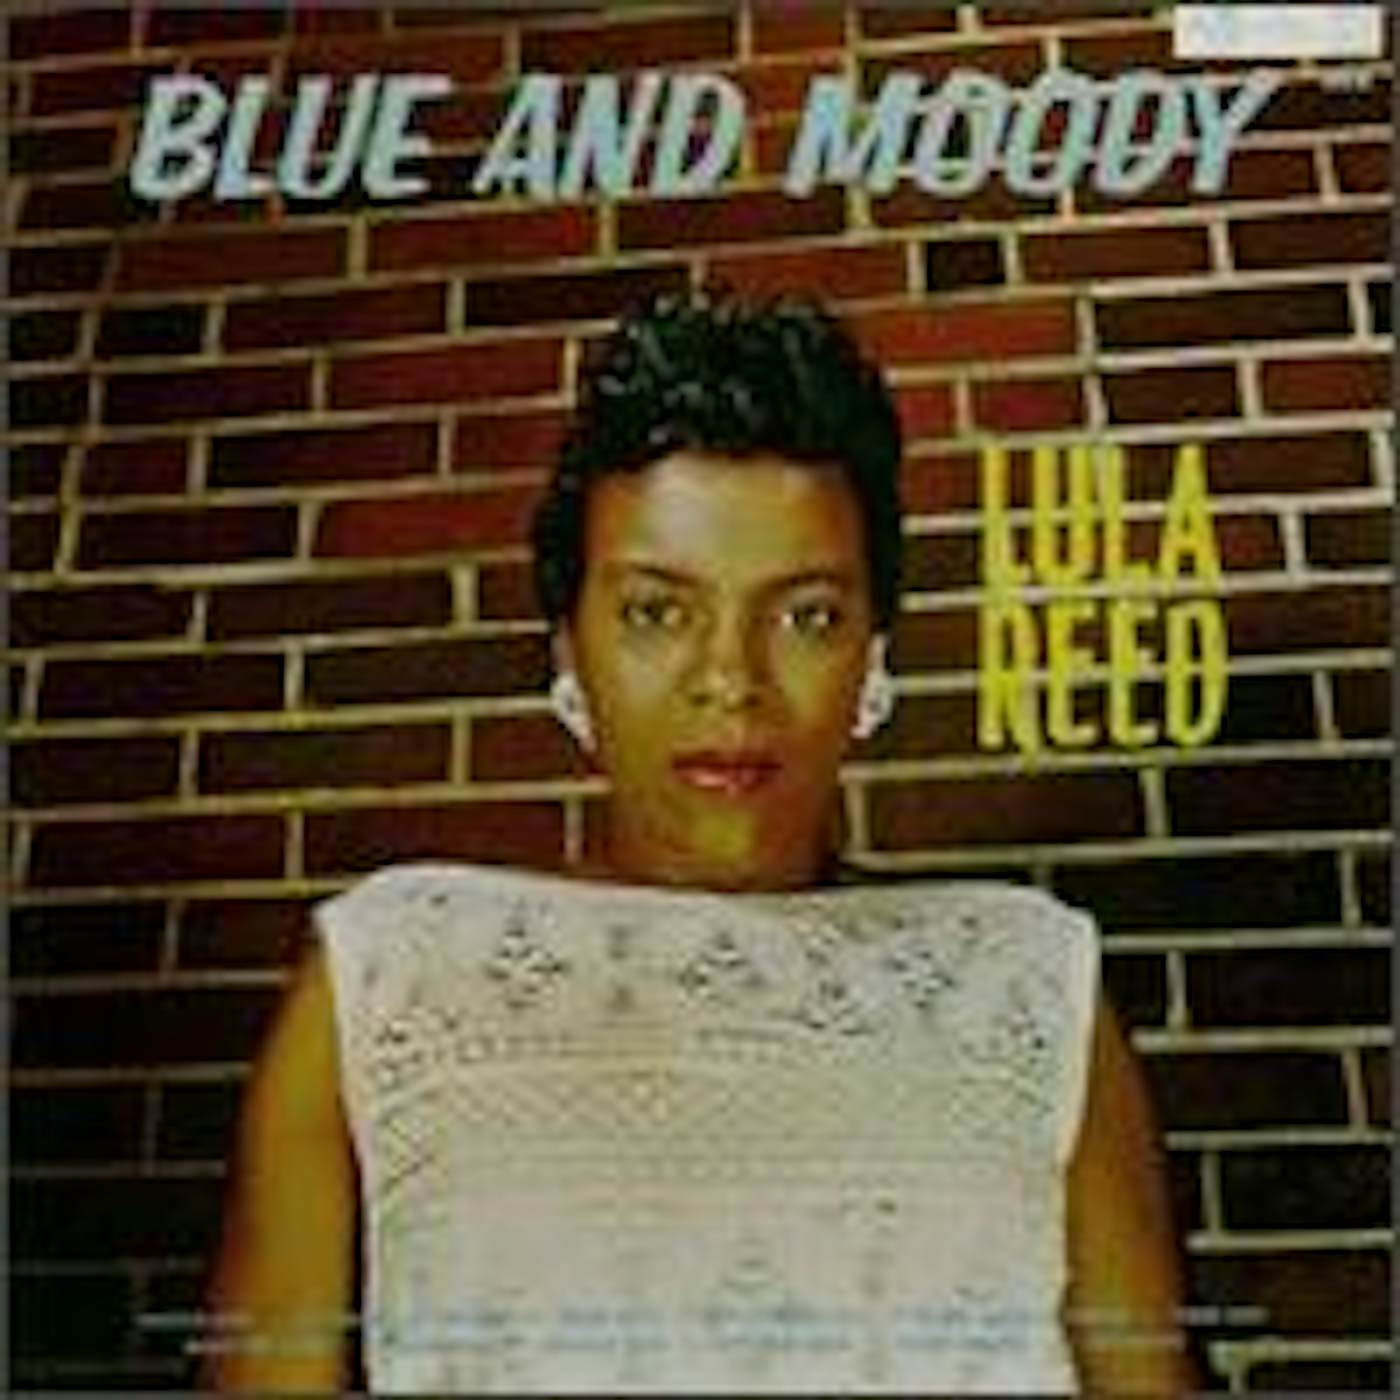 Lula Reed BLUE & MOODY CD